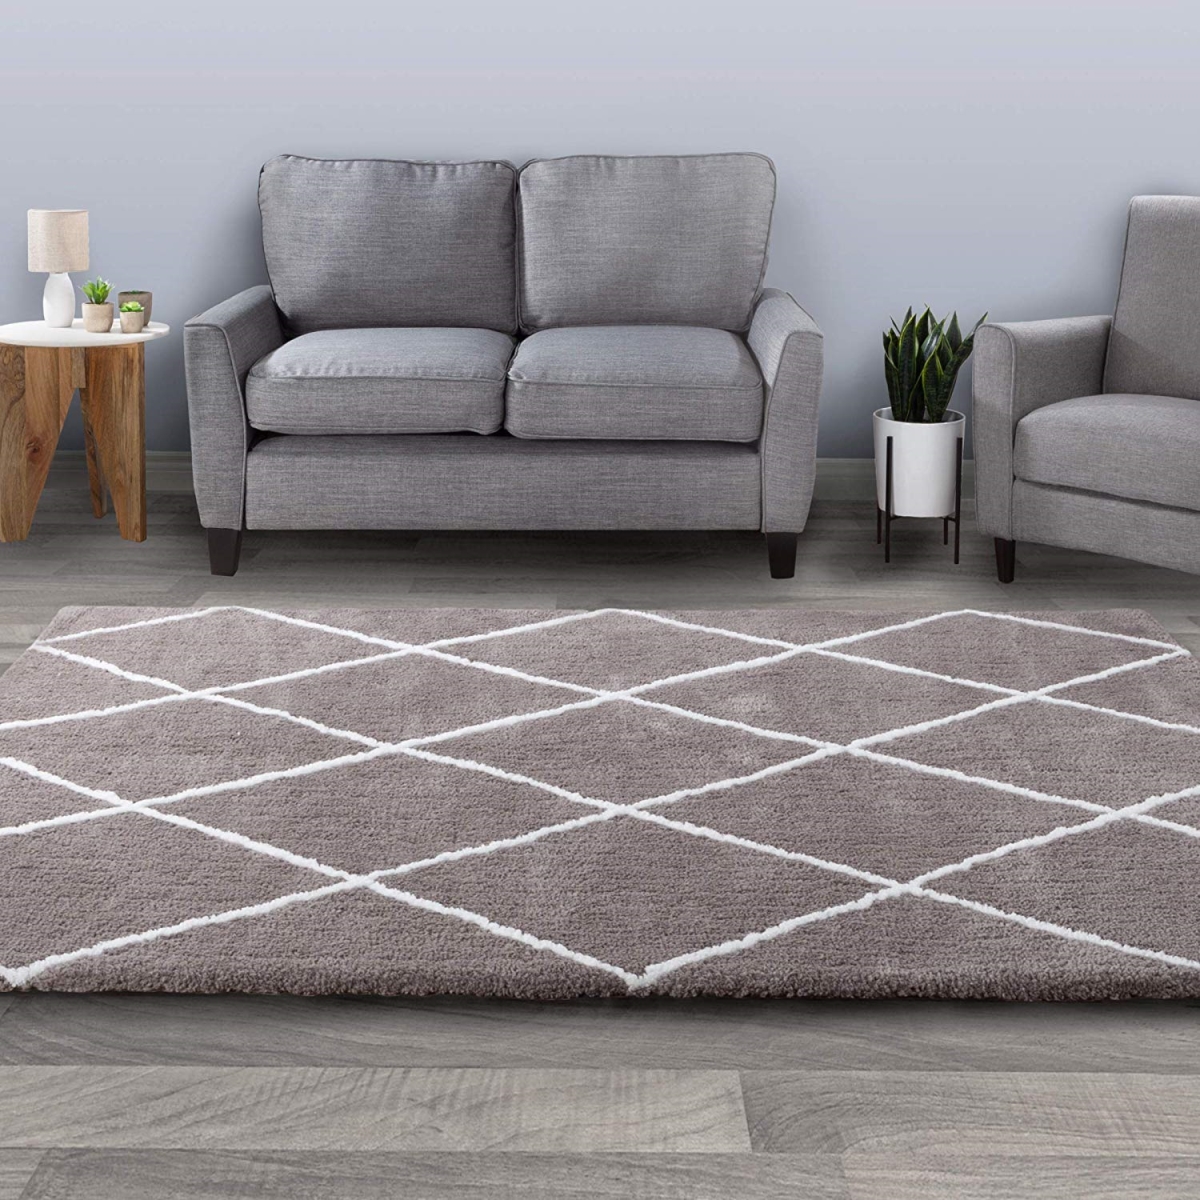 62a-64302 8 X 10 Ft. Diamond Shag Area Rug-plush Pattern Carpet, Gray & Ivory